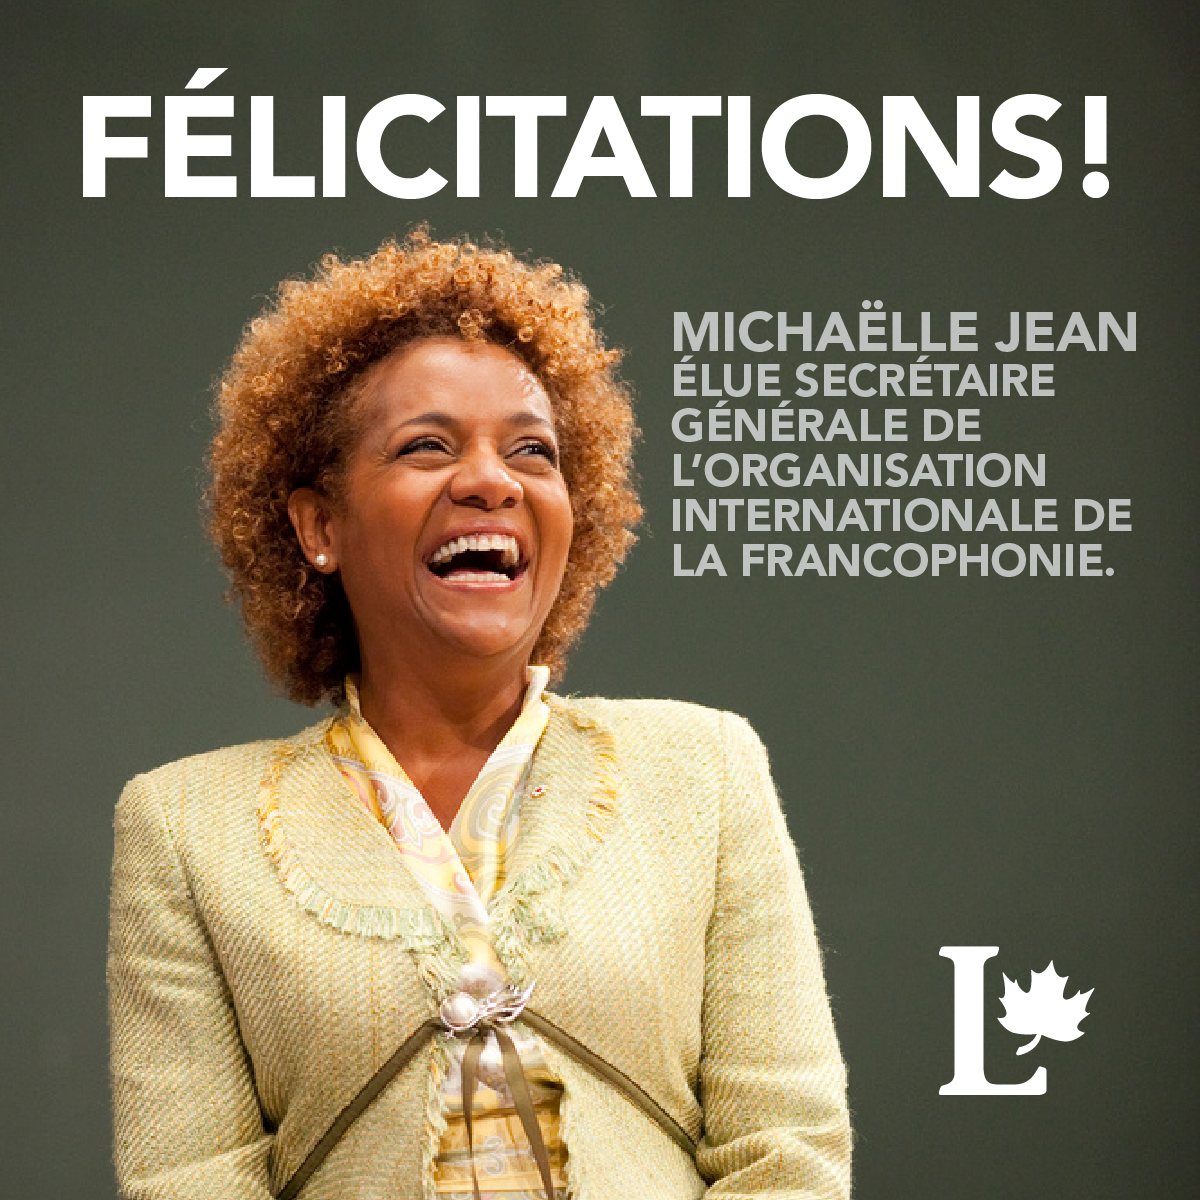 Michaelle Jean elue Secretaire Genarale de L'Organization Internationale de La Francophonie!